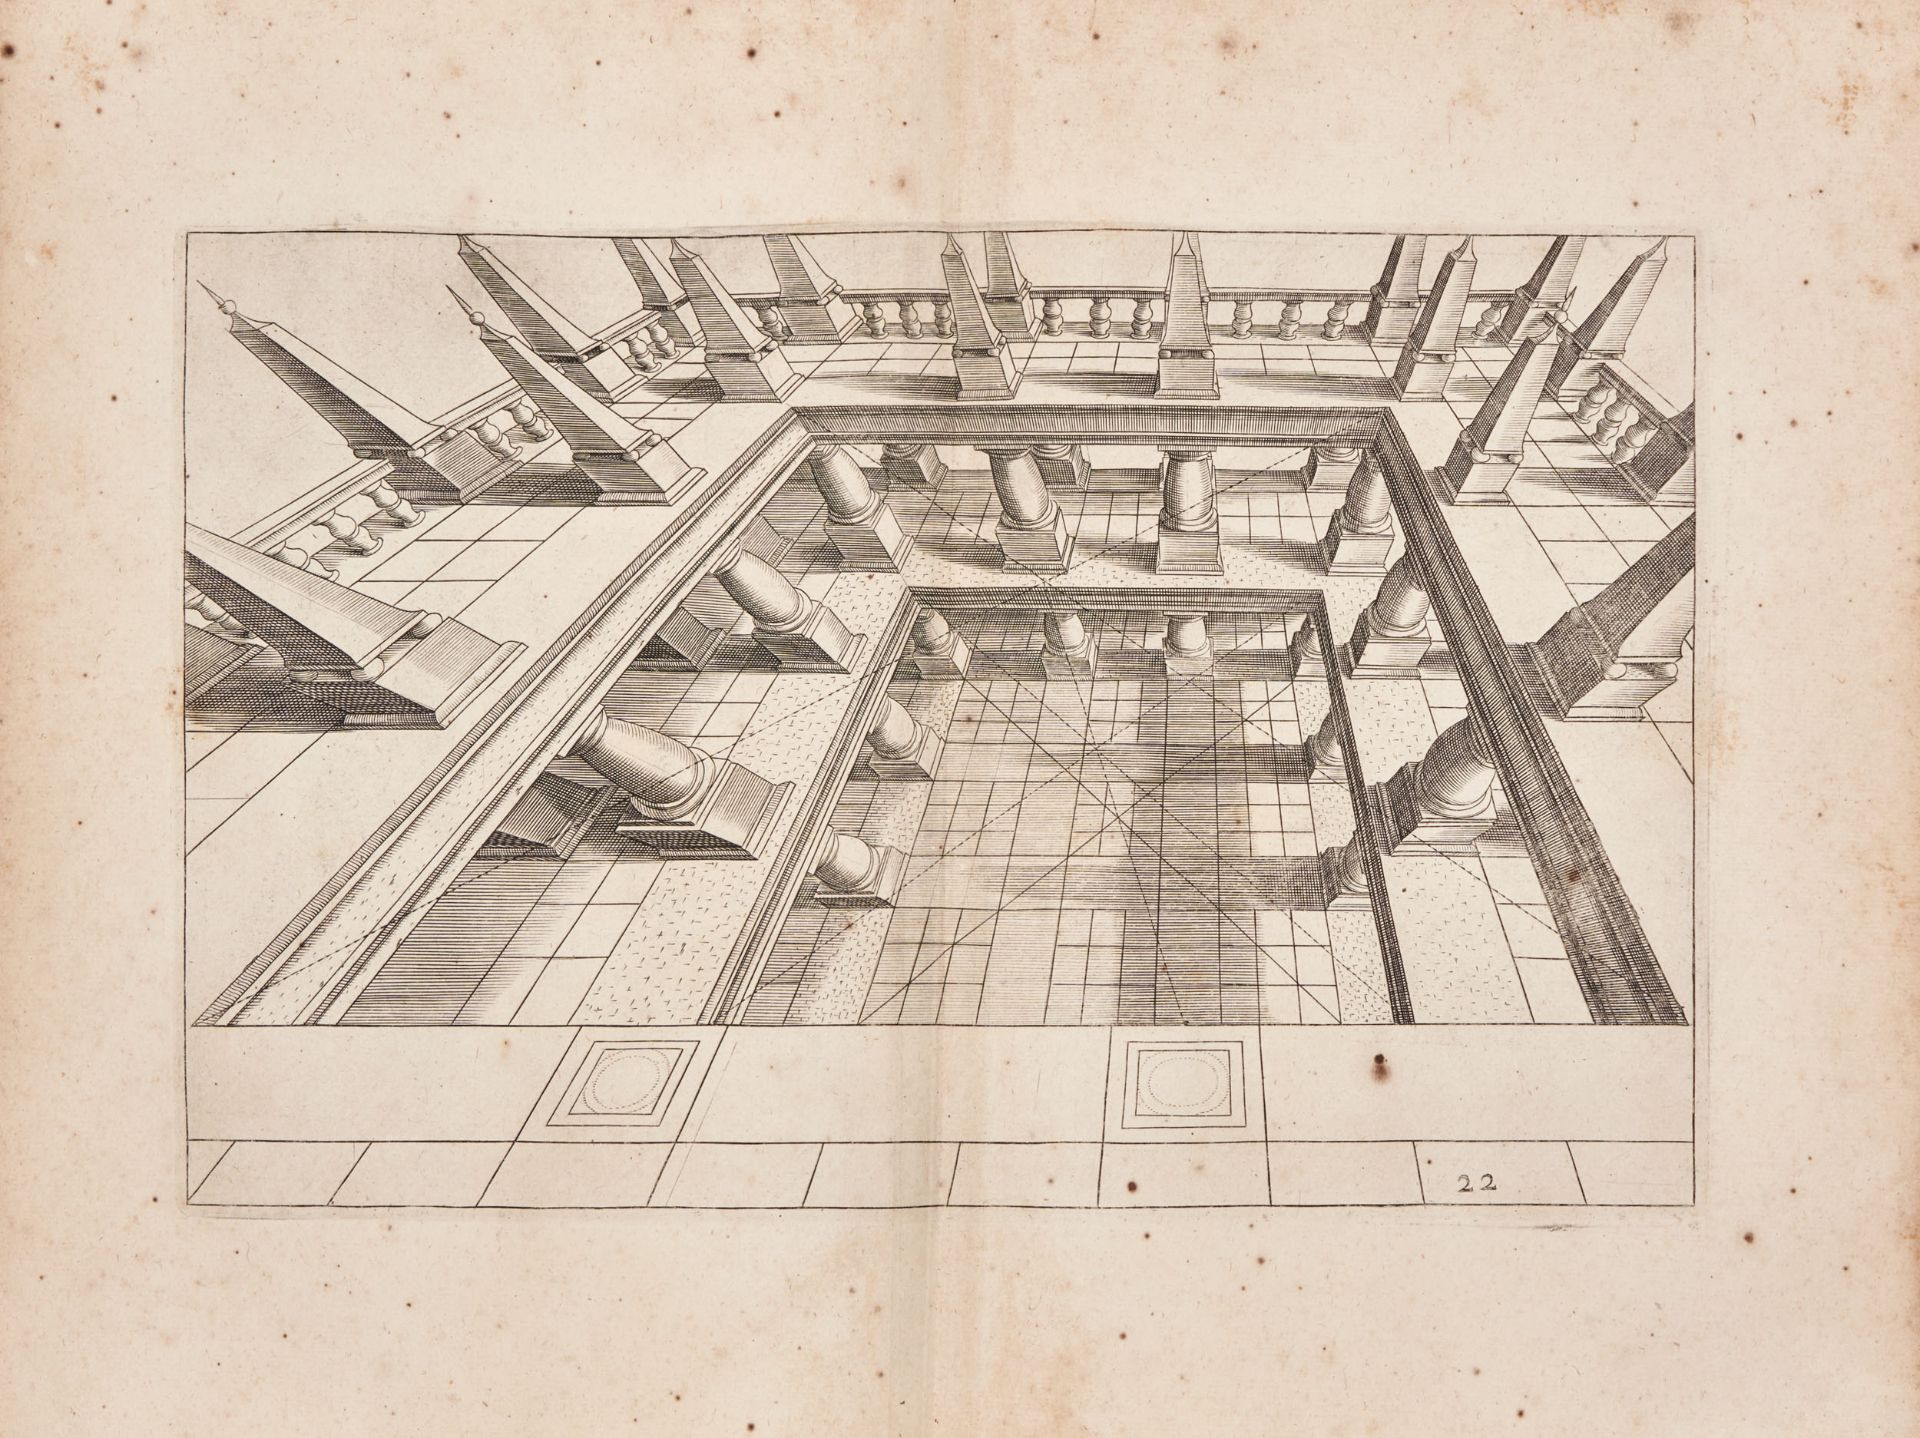 VREDEMAN DE VRIES, Jan (1527-1609). Perspectiva theoretica ac practica [BOUND WITH:] Architectura